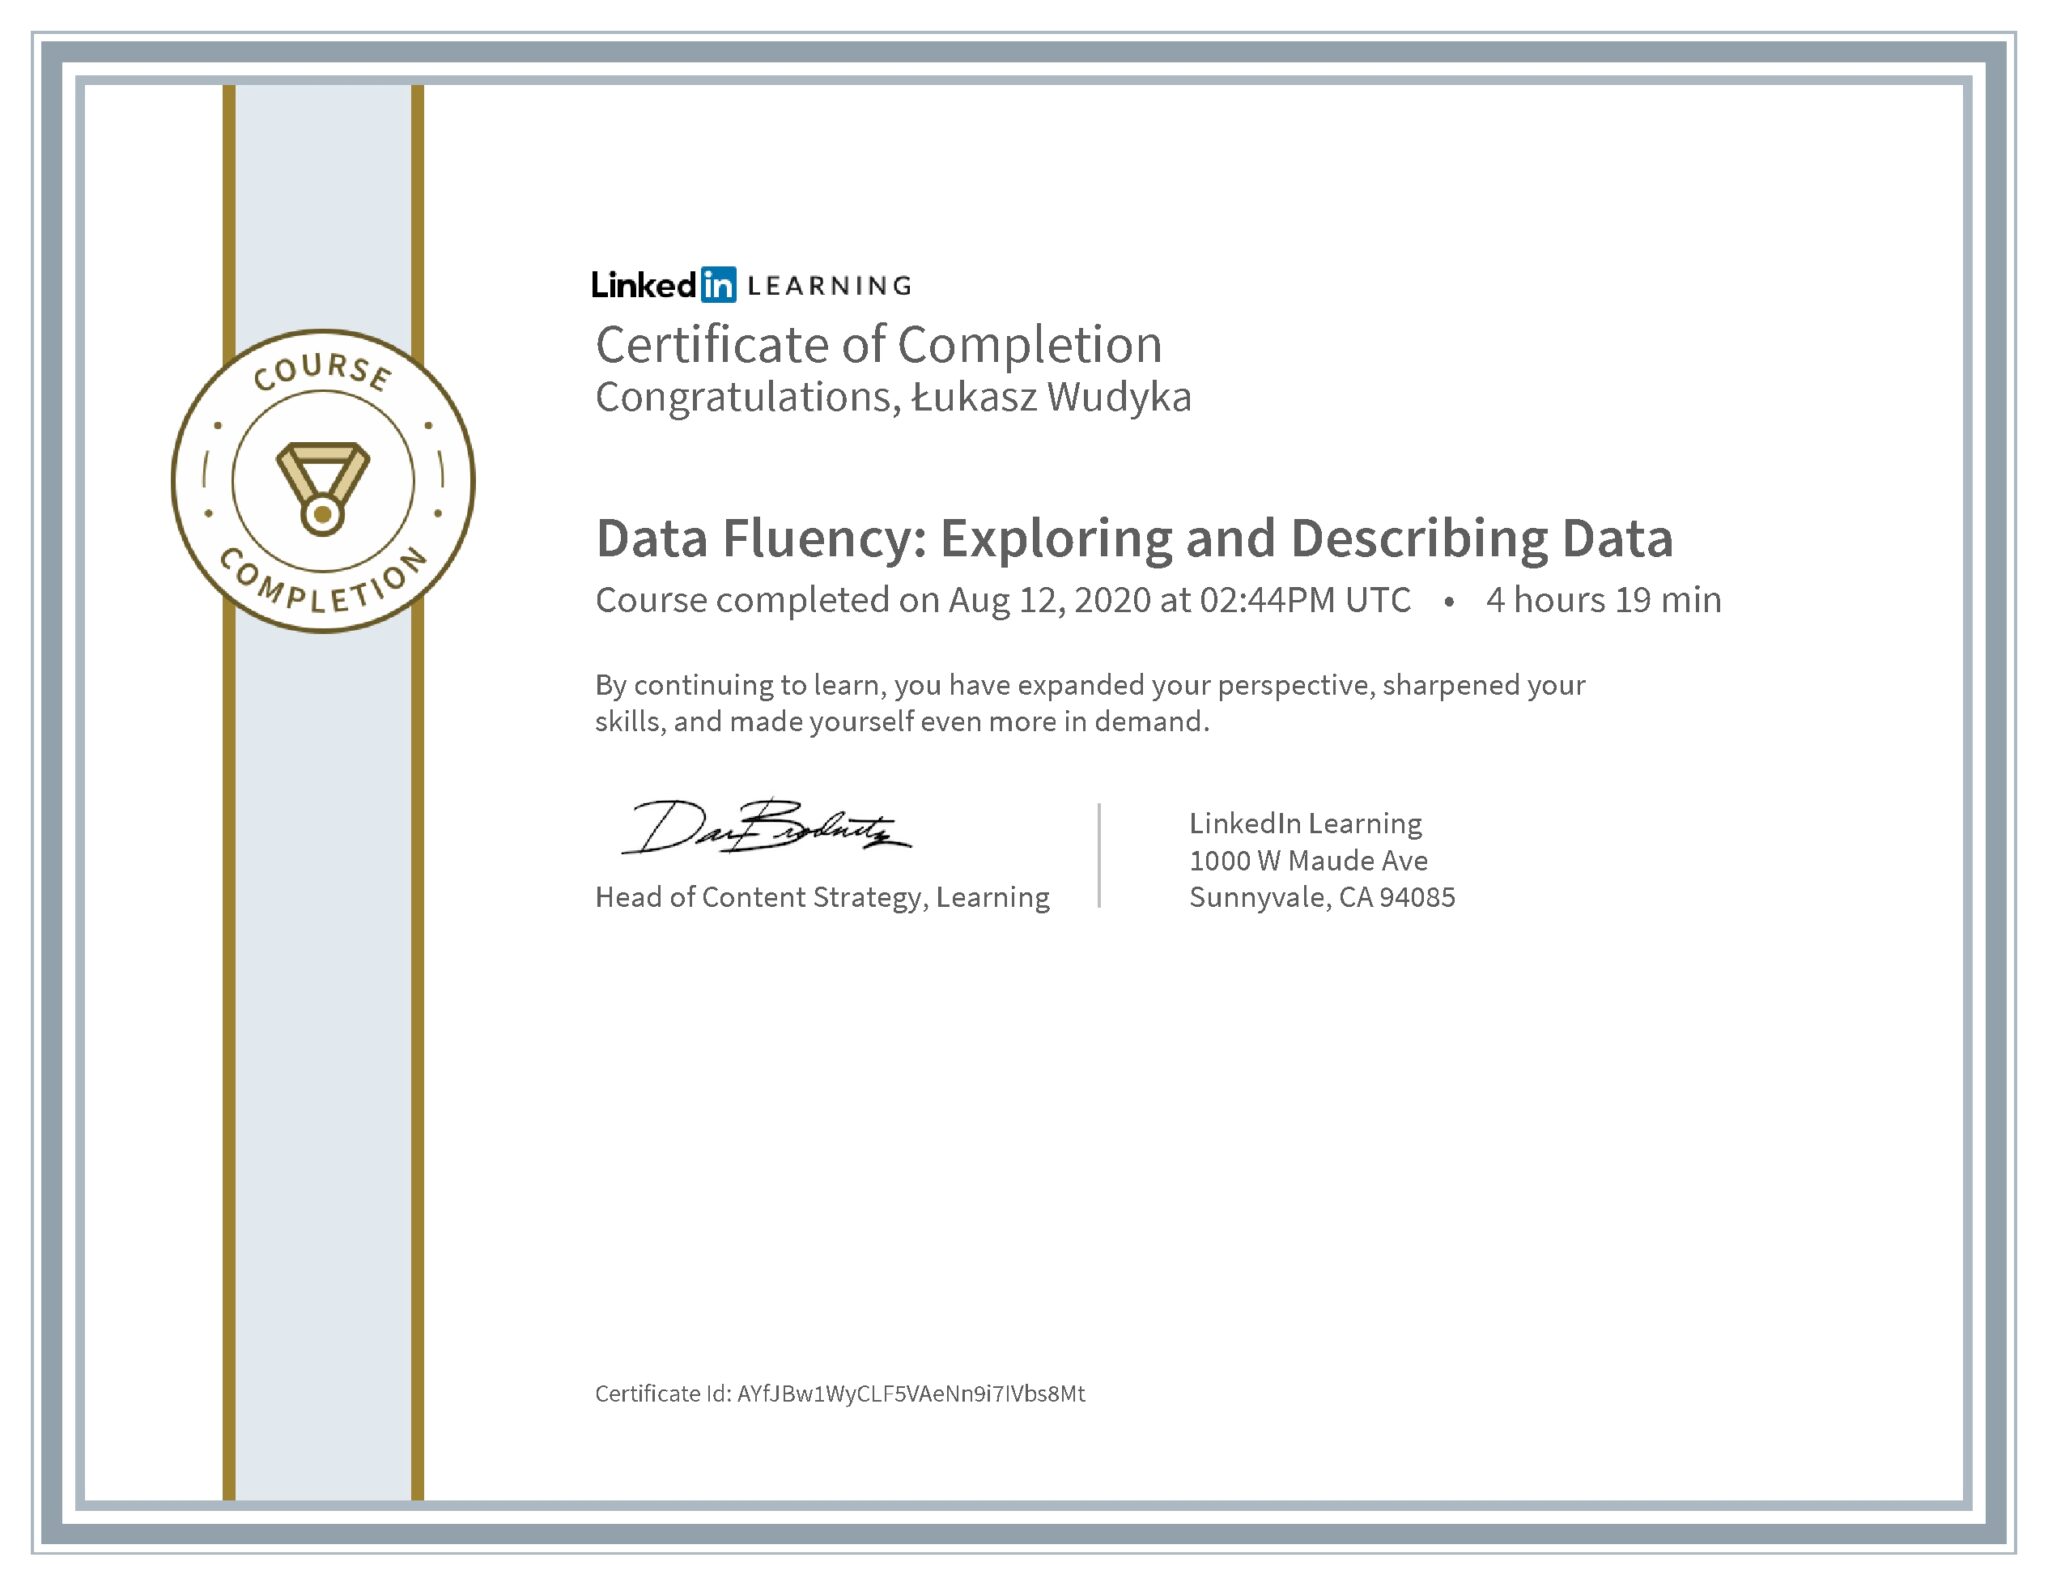 Łukasz Wudyka certyfikat LinkedIn Data Fluency: Exploring and Describing Data